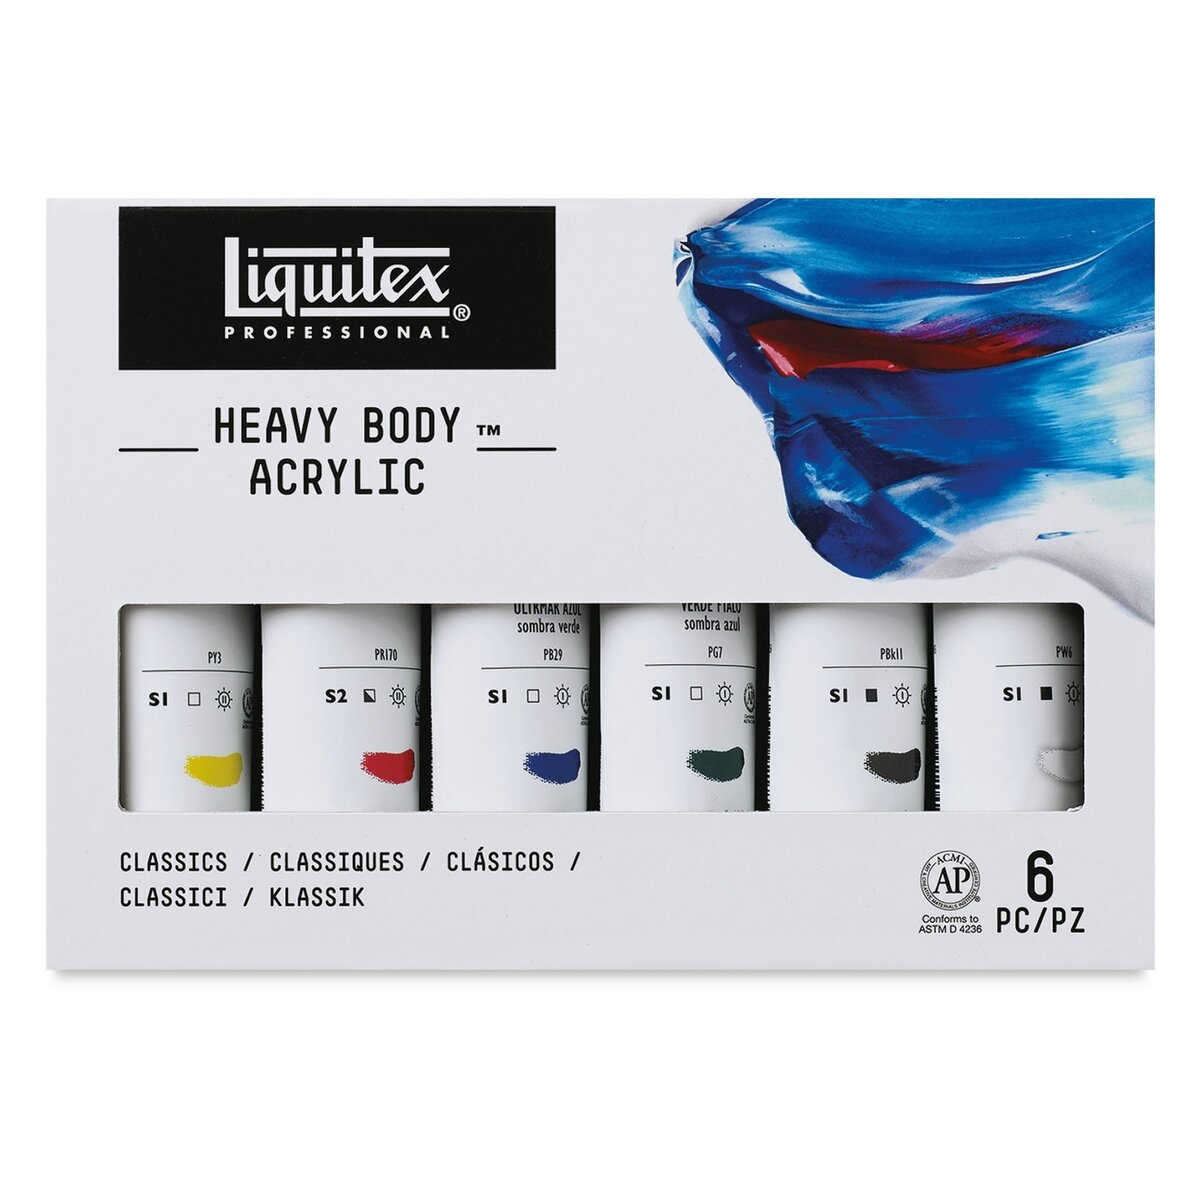 Liquitex Professional Heavy Body Acrylic Paint, 6 x 22ml (0.74-oz) Color  Set,Blue,Green,White